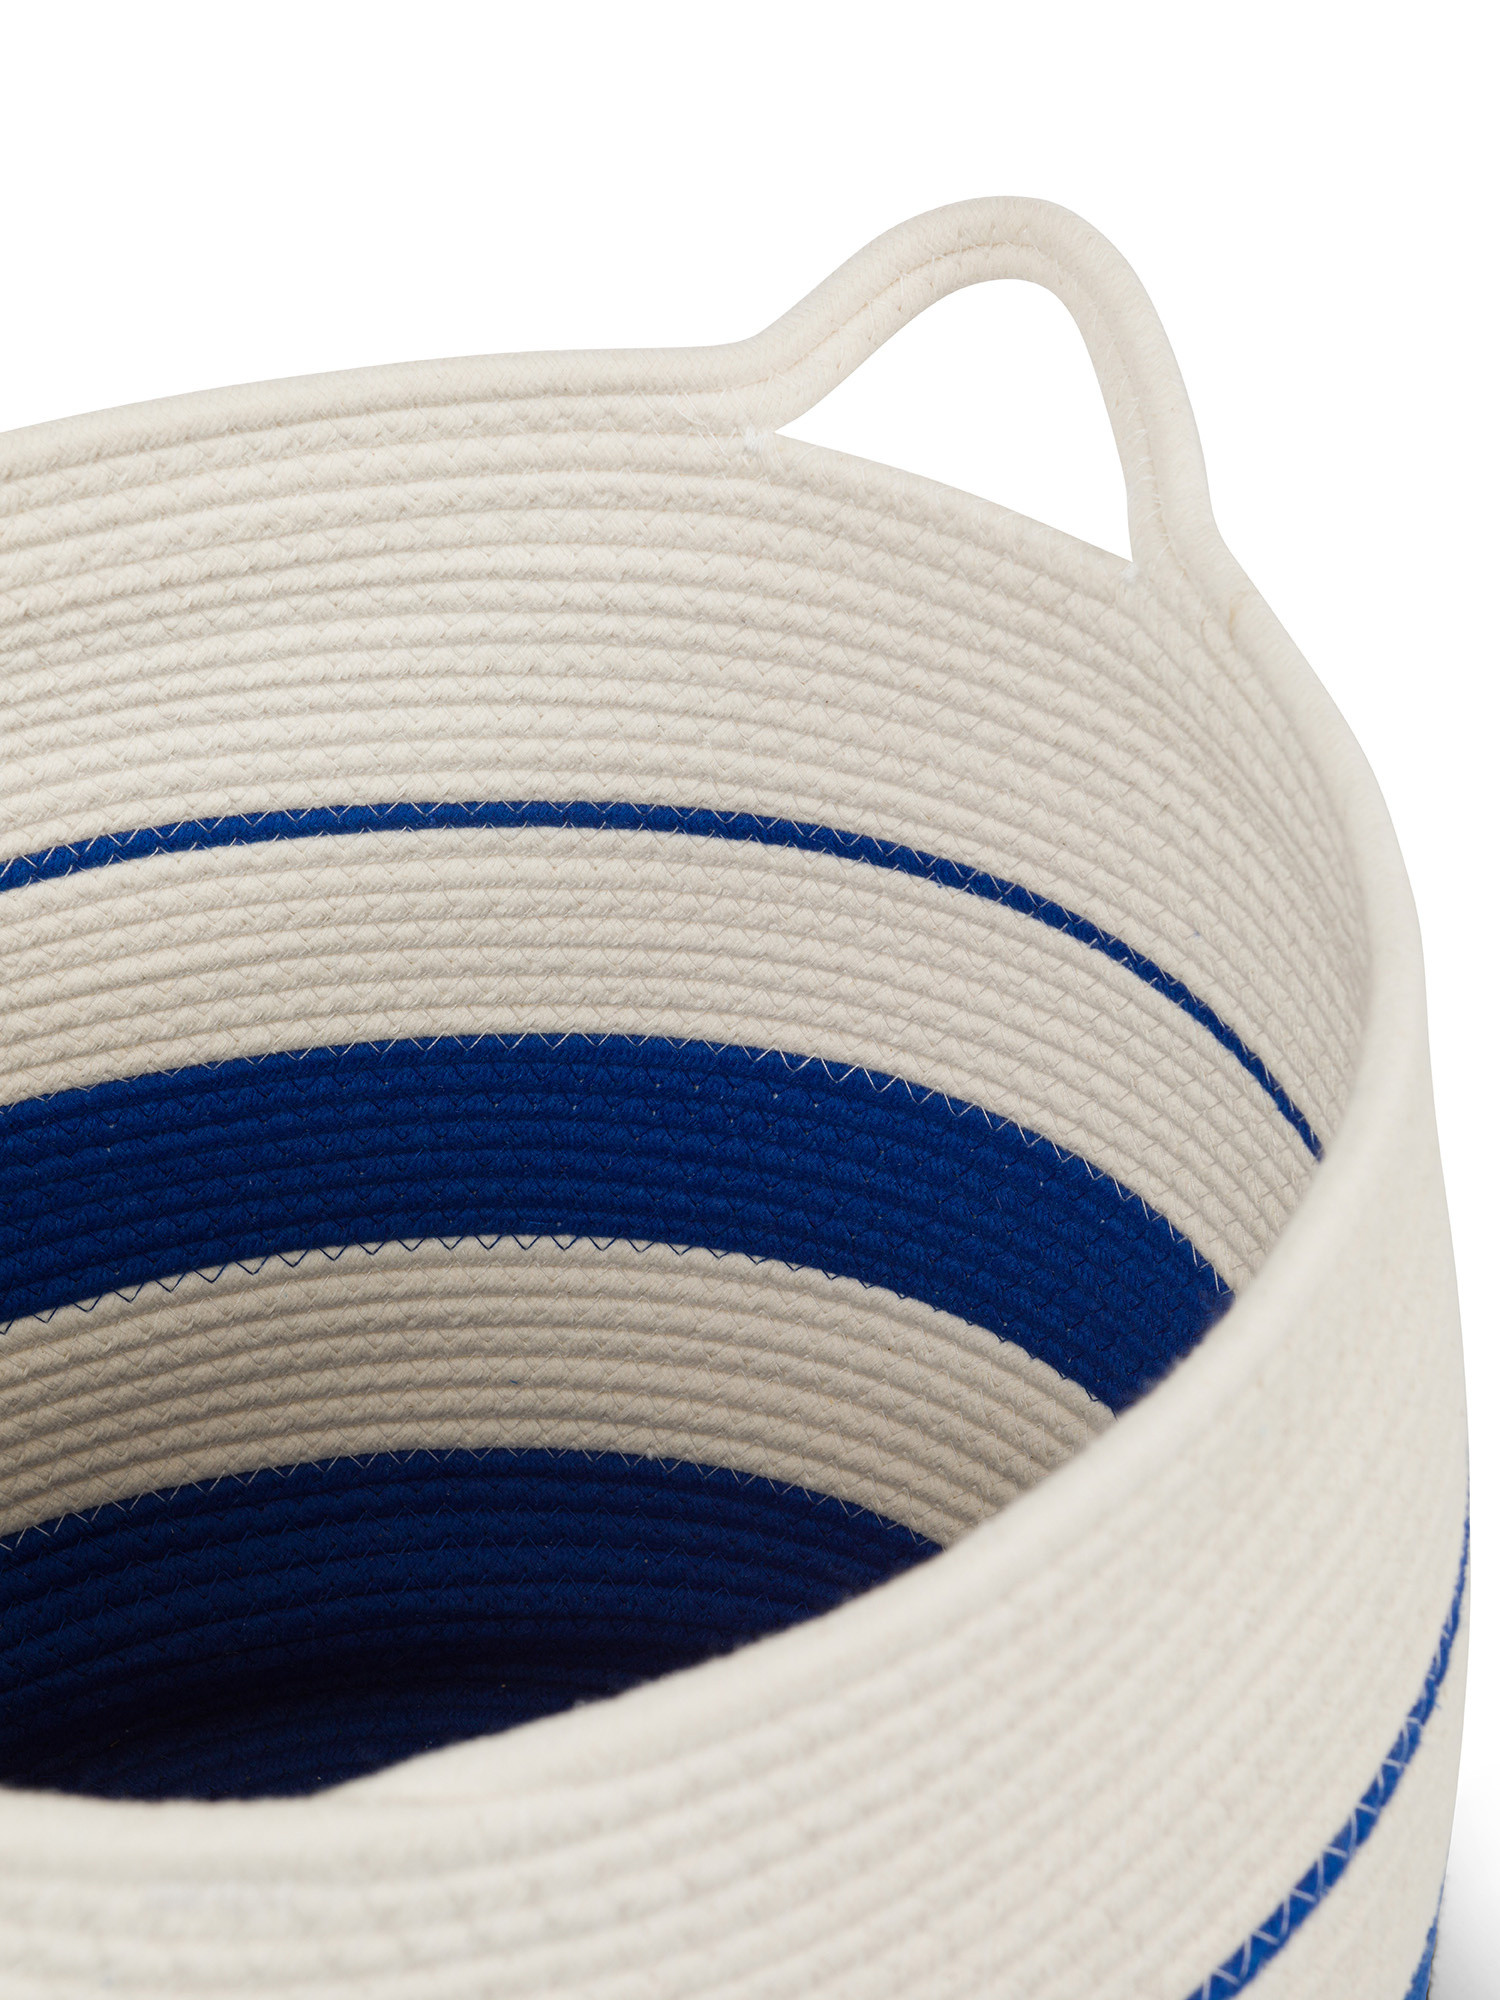 Rope basket, White / Blue, large image number 1